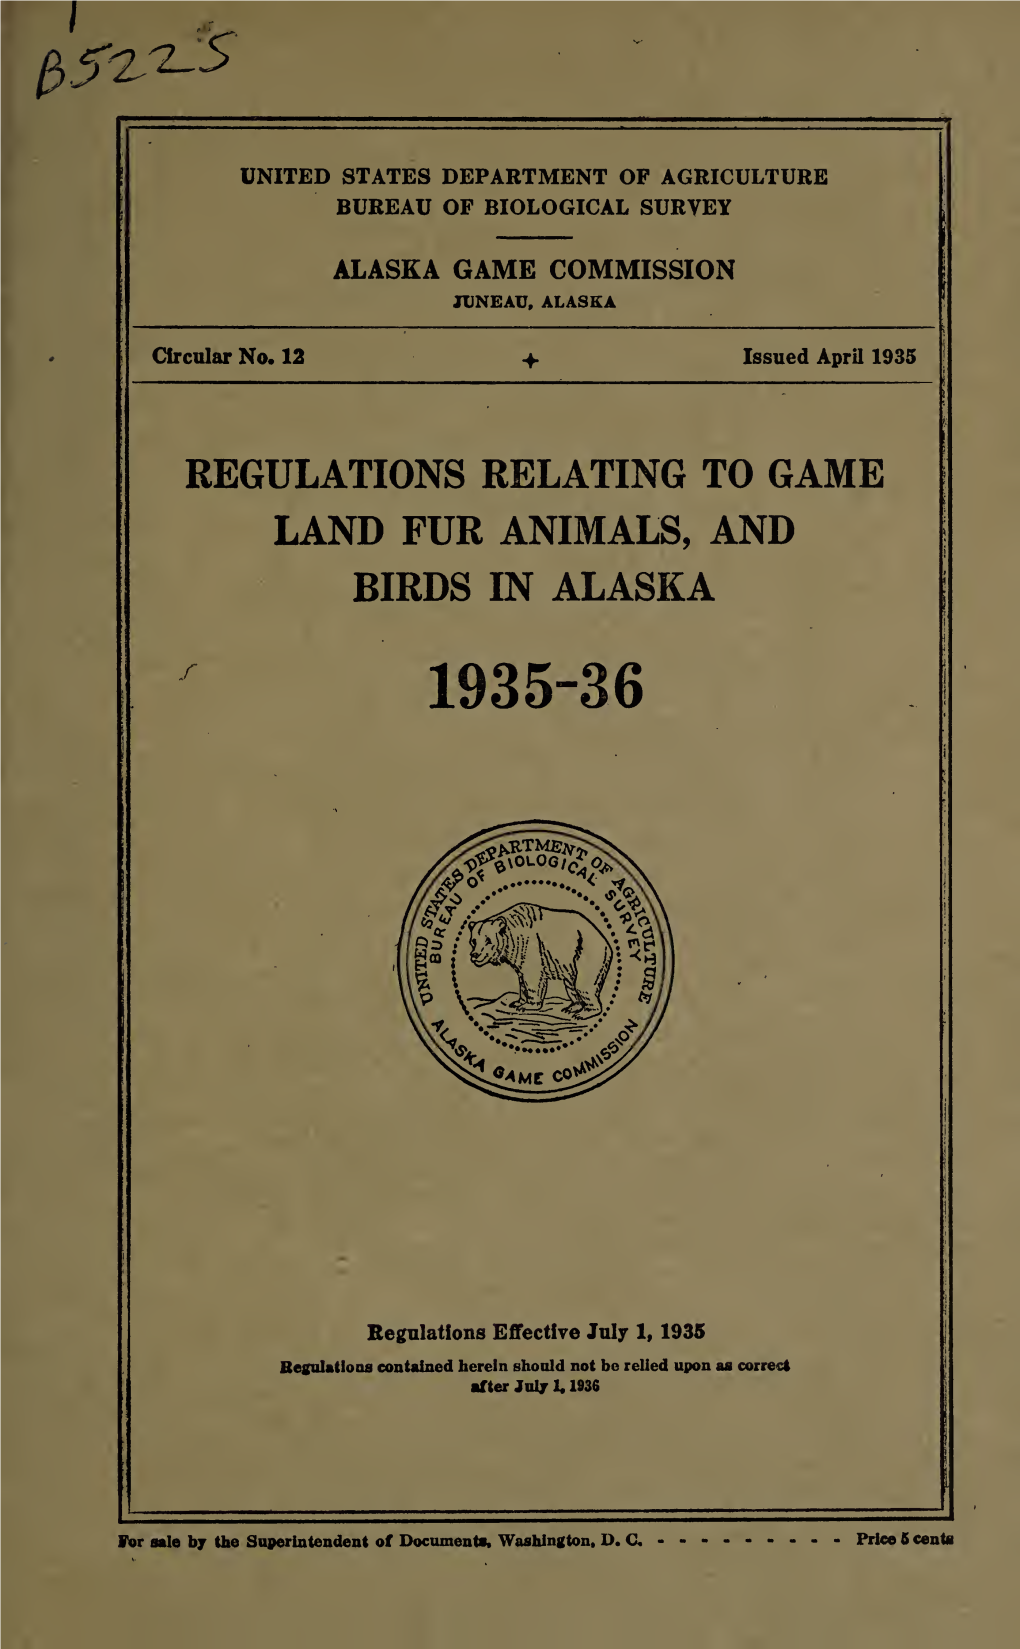 Regulations Relating to Game Land Fur Animals, and Birds in Alaska 1935-36